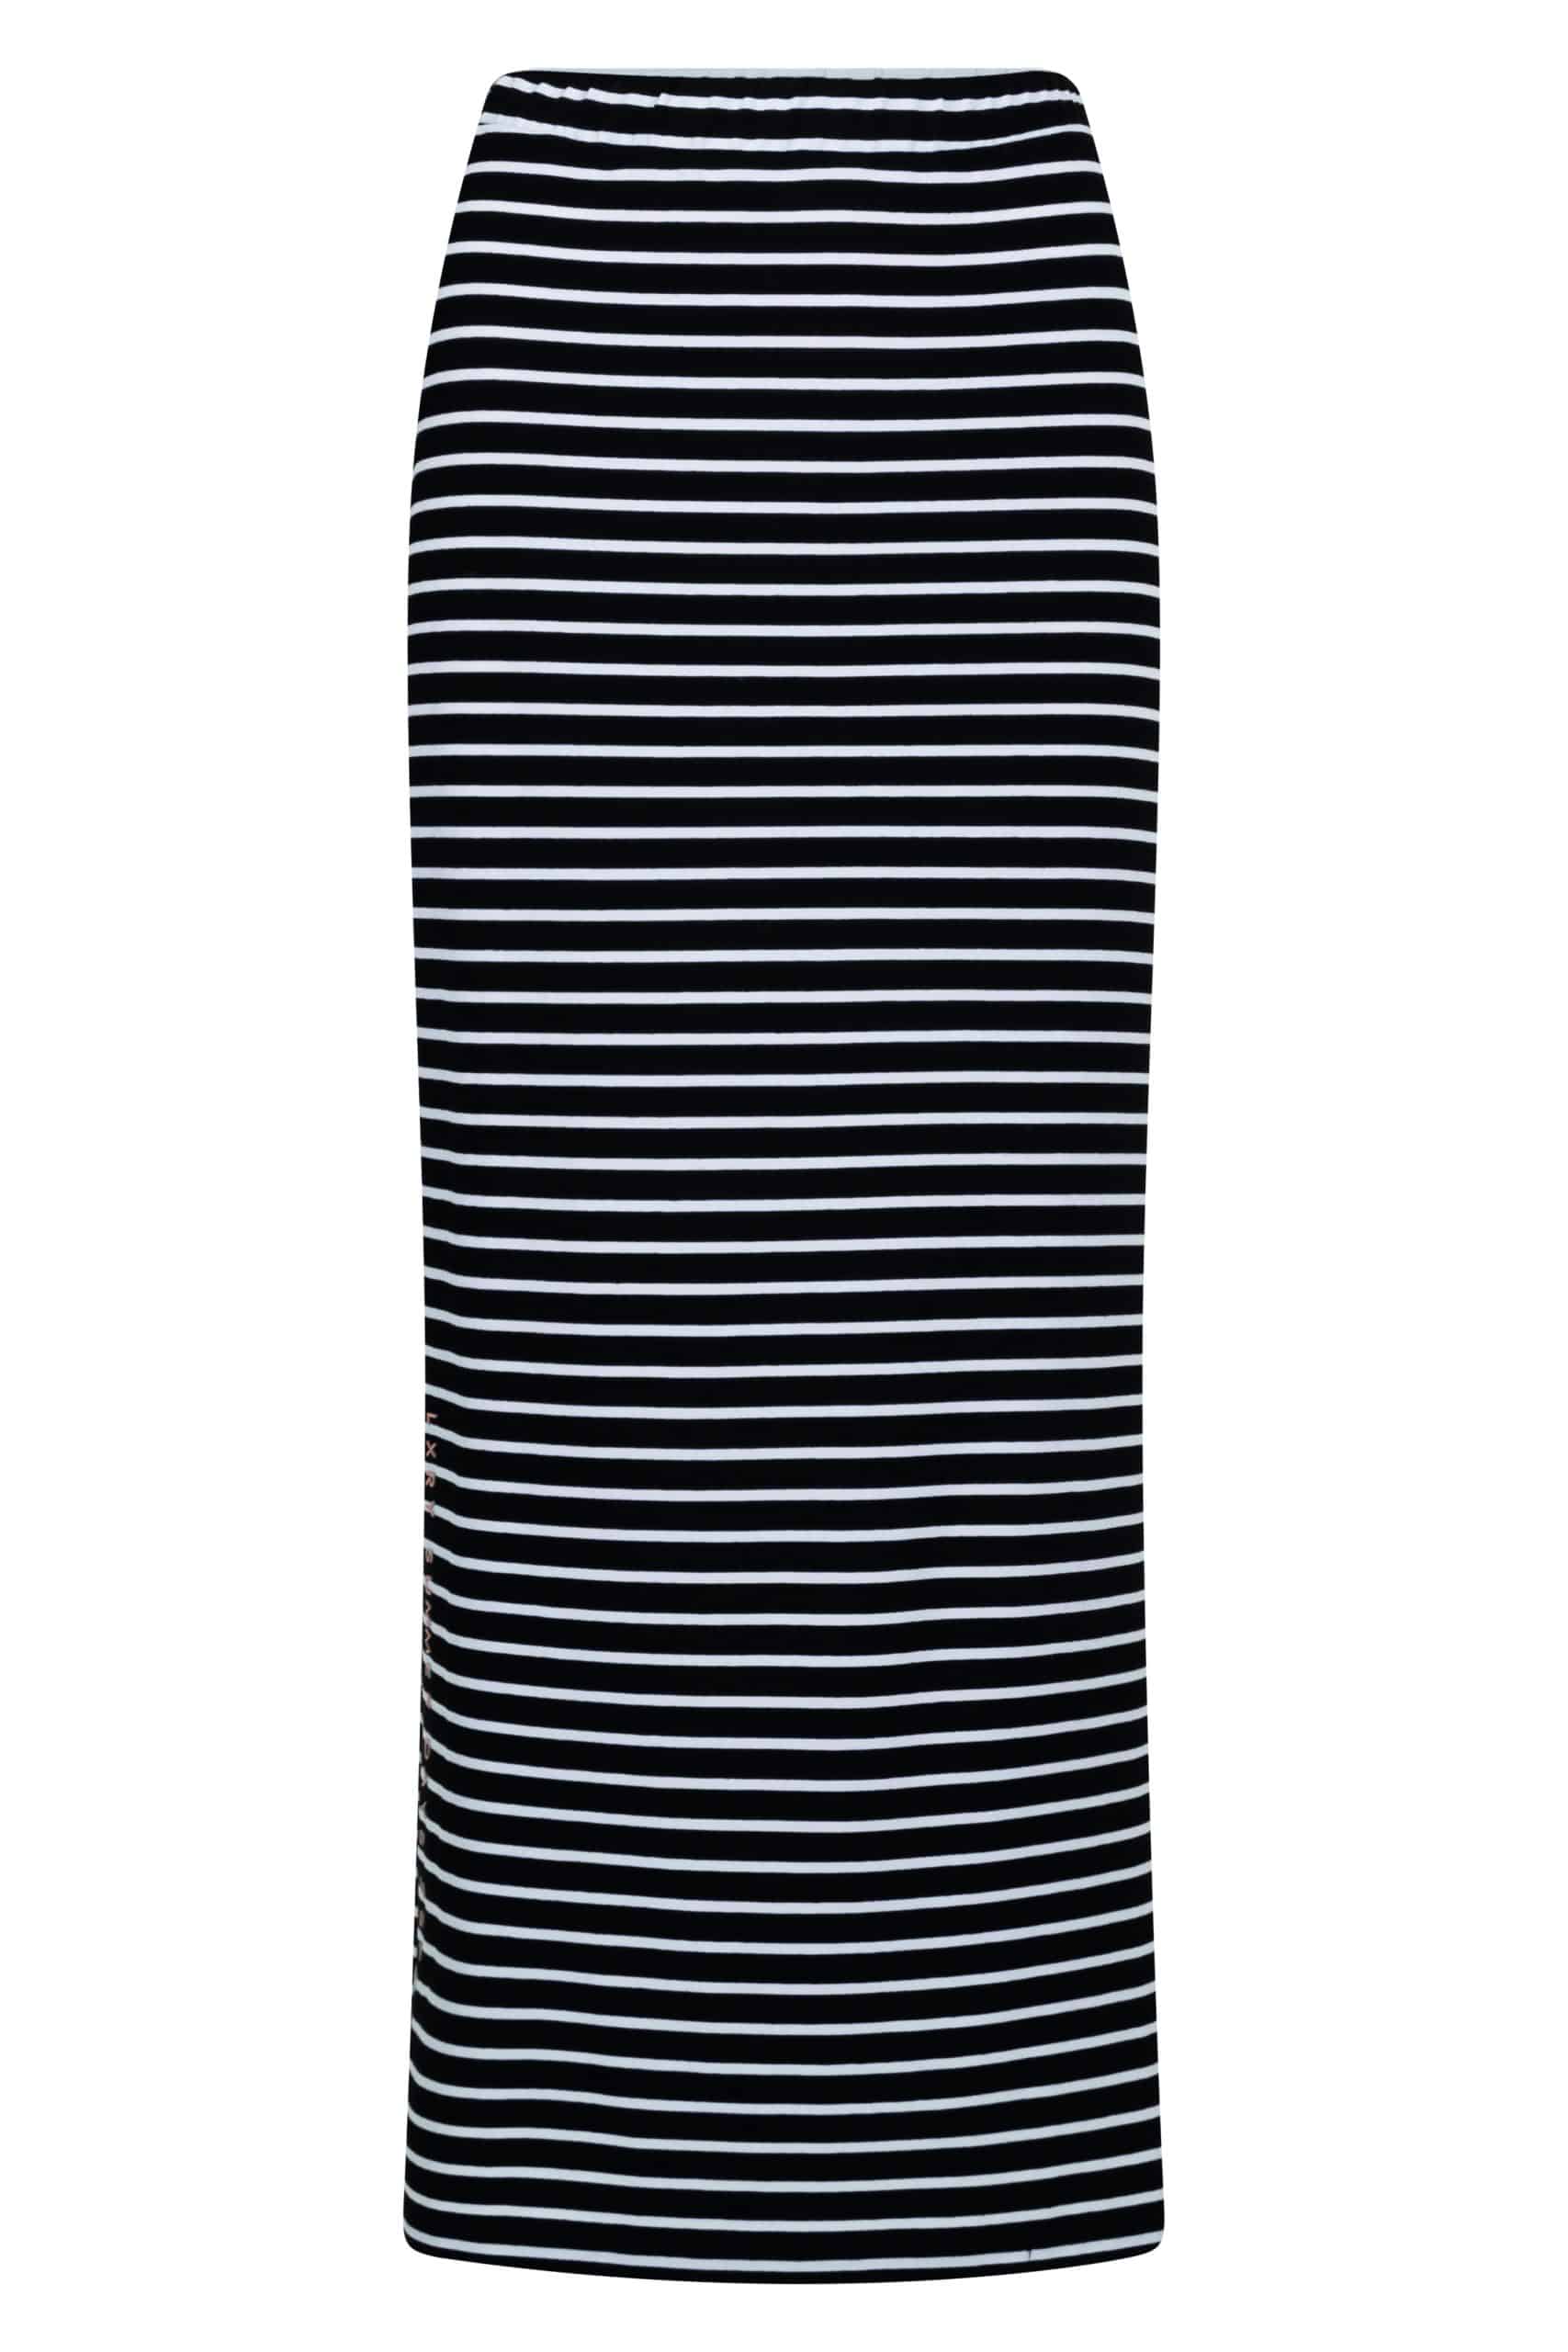 Zoso 223 Lago Striped Skirt